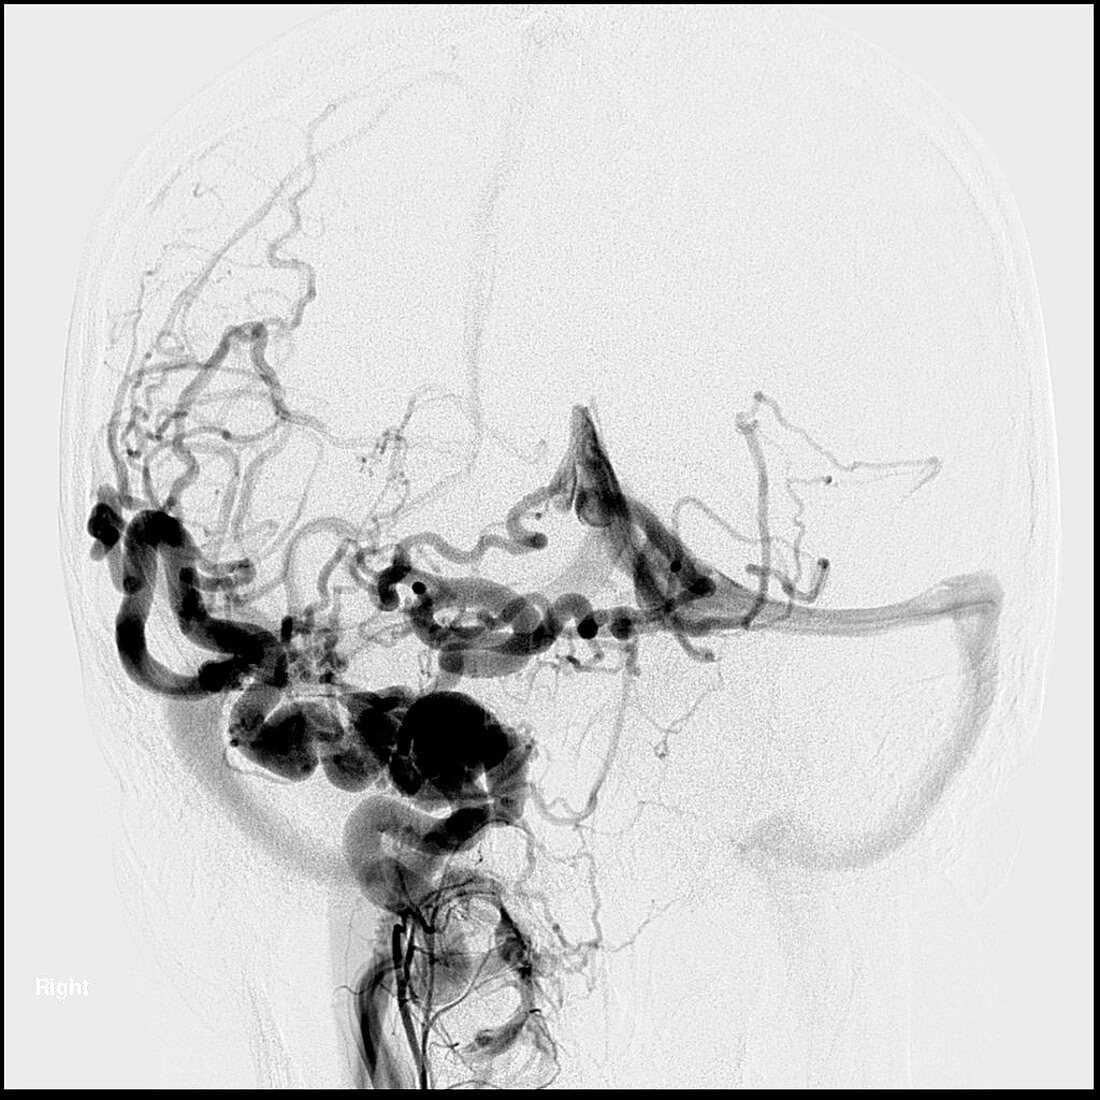 Carotid Cavernous Sinus Fistula,MRI